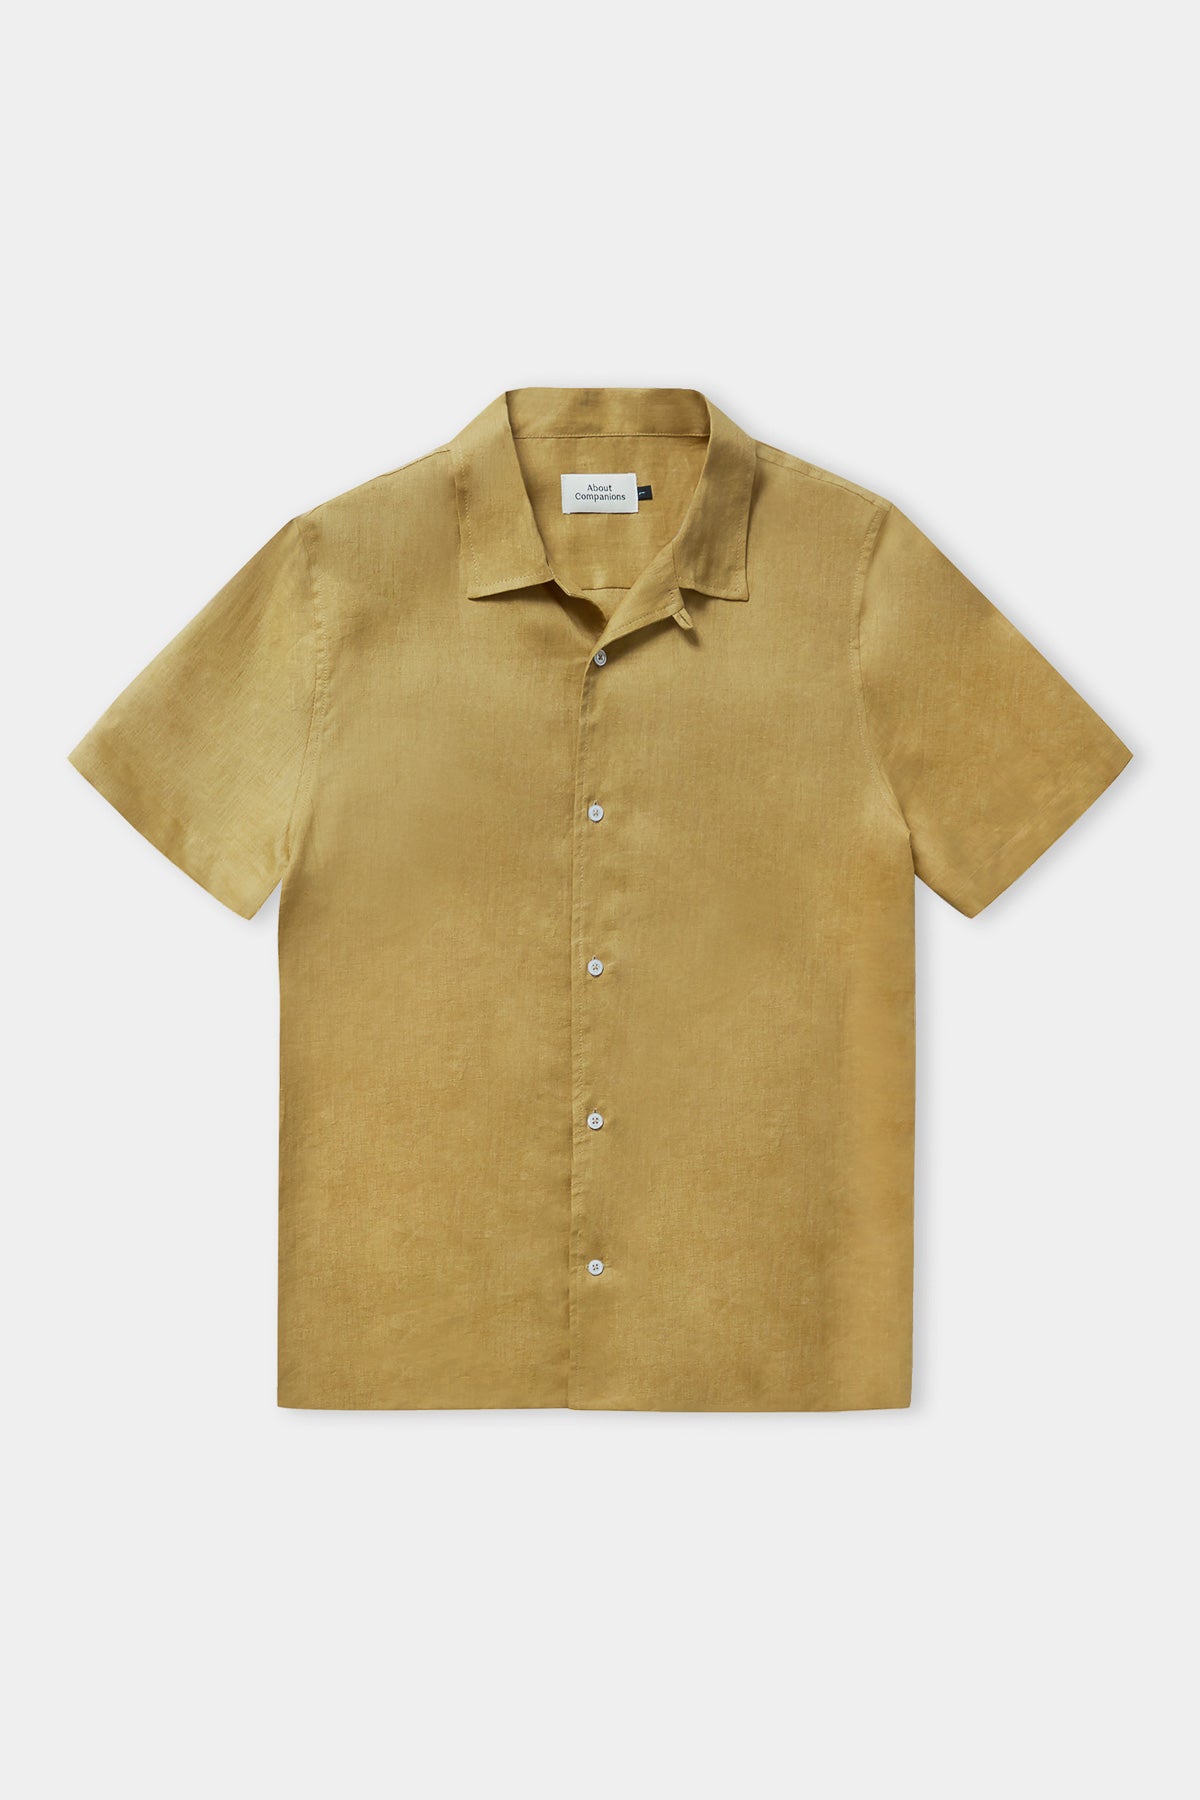 KUNO shirt gold pure linen